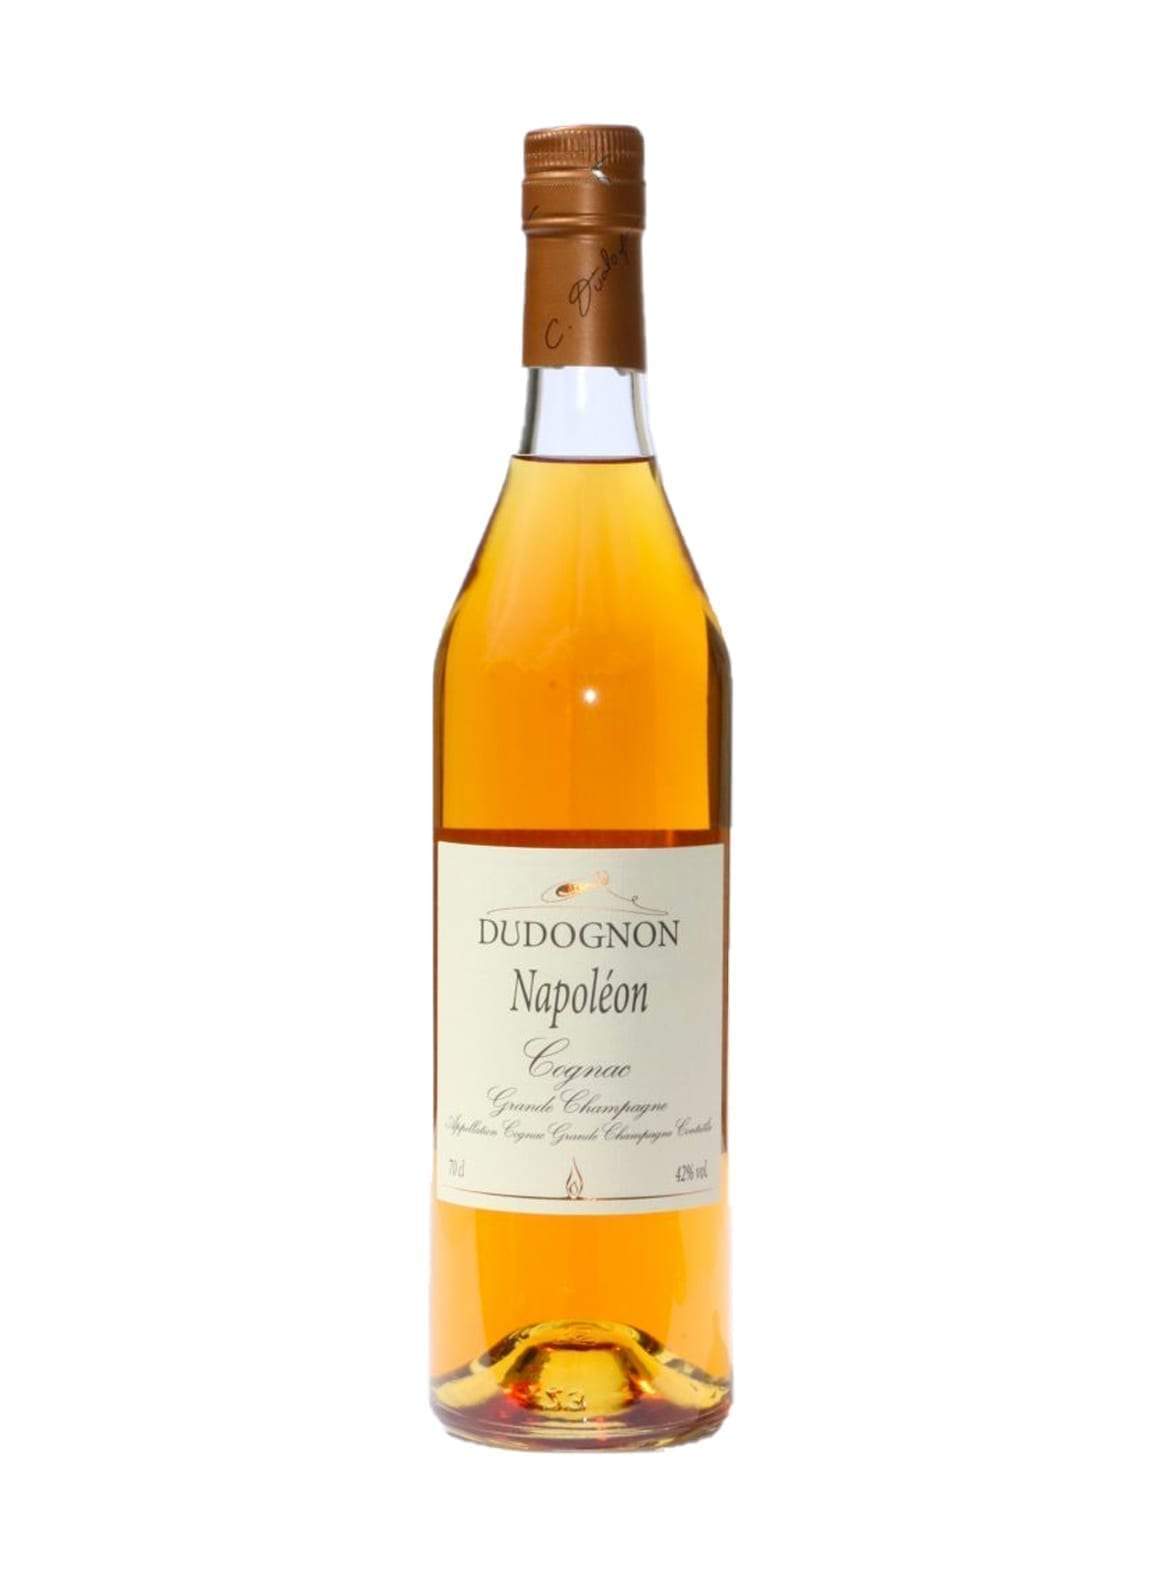 Dudognon Cognac Napoleon 15 years 42% 700ml | Brandy | Shop online at Spirits of France